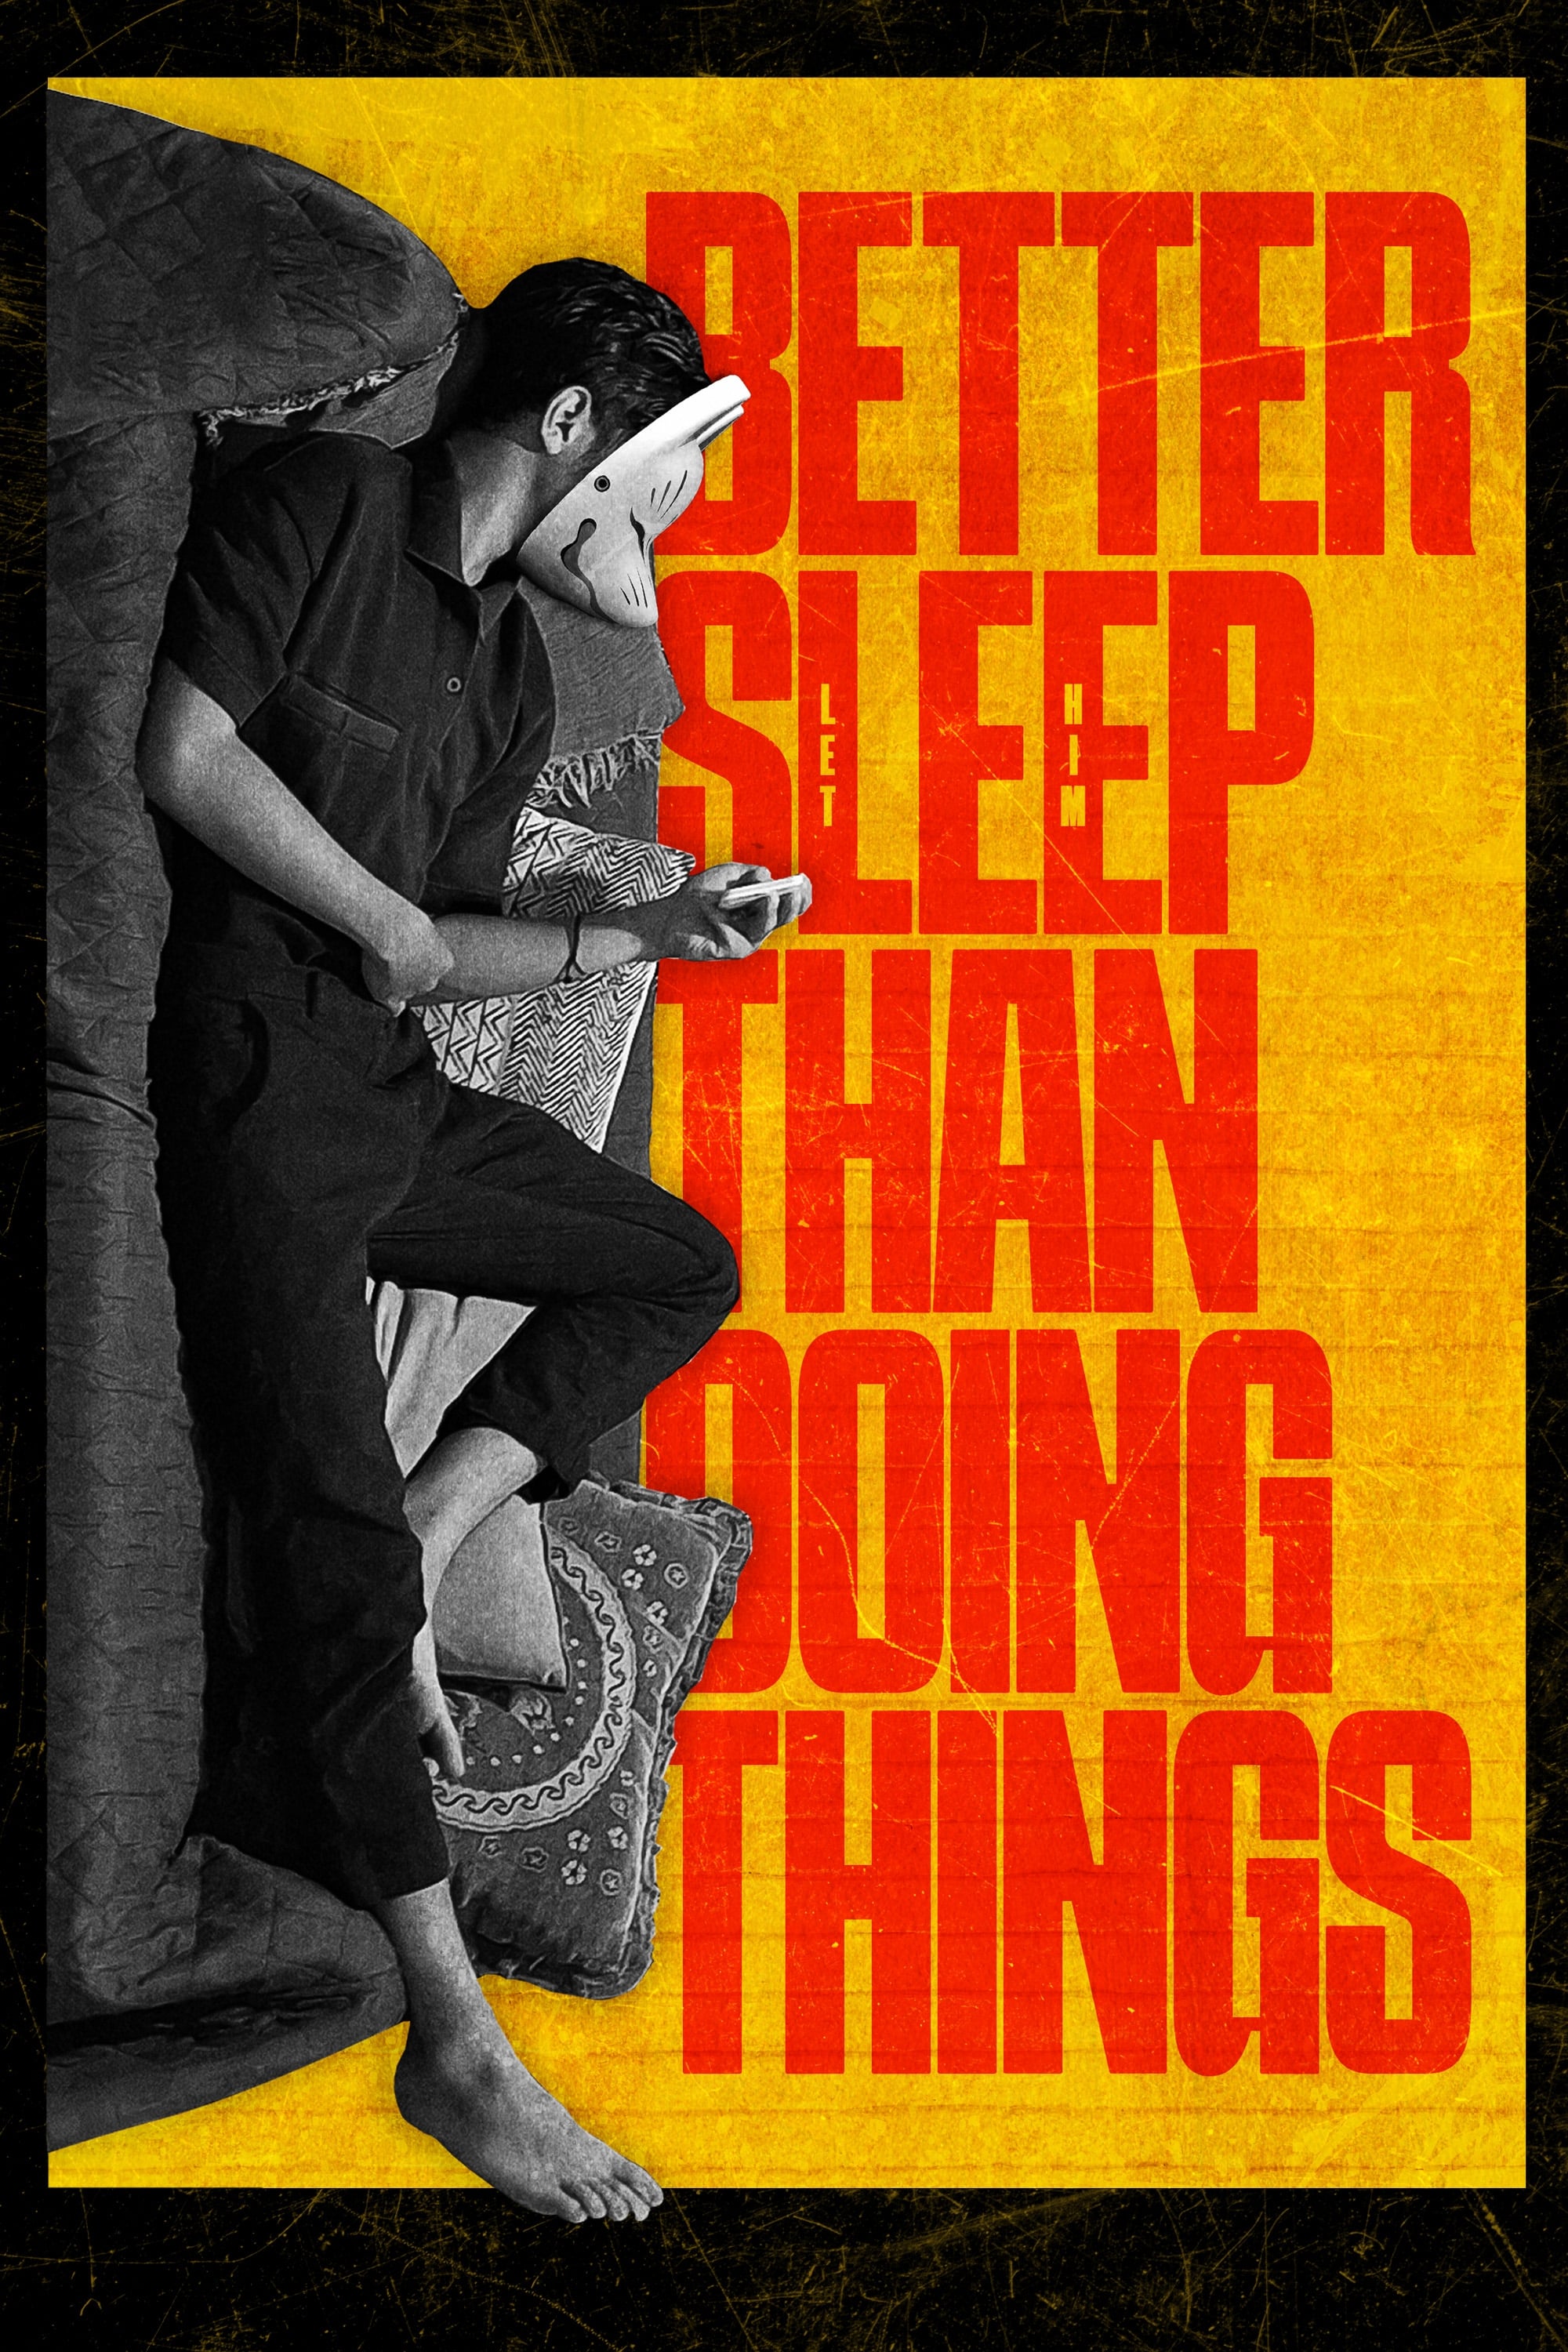 Better Sleep Than Doing Things